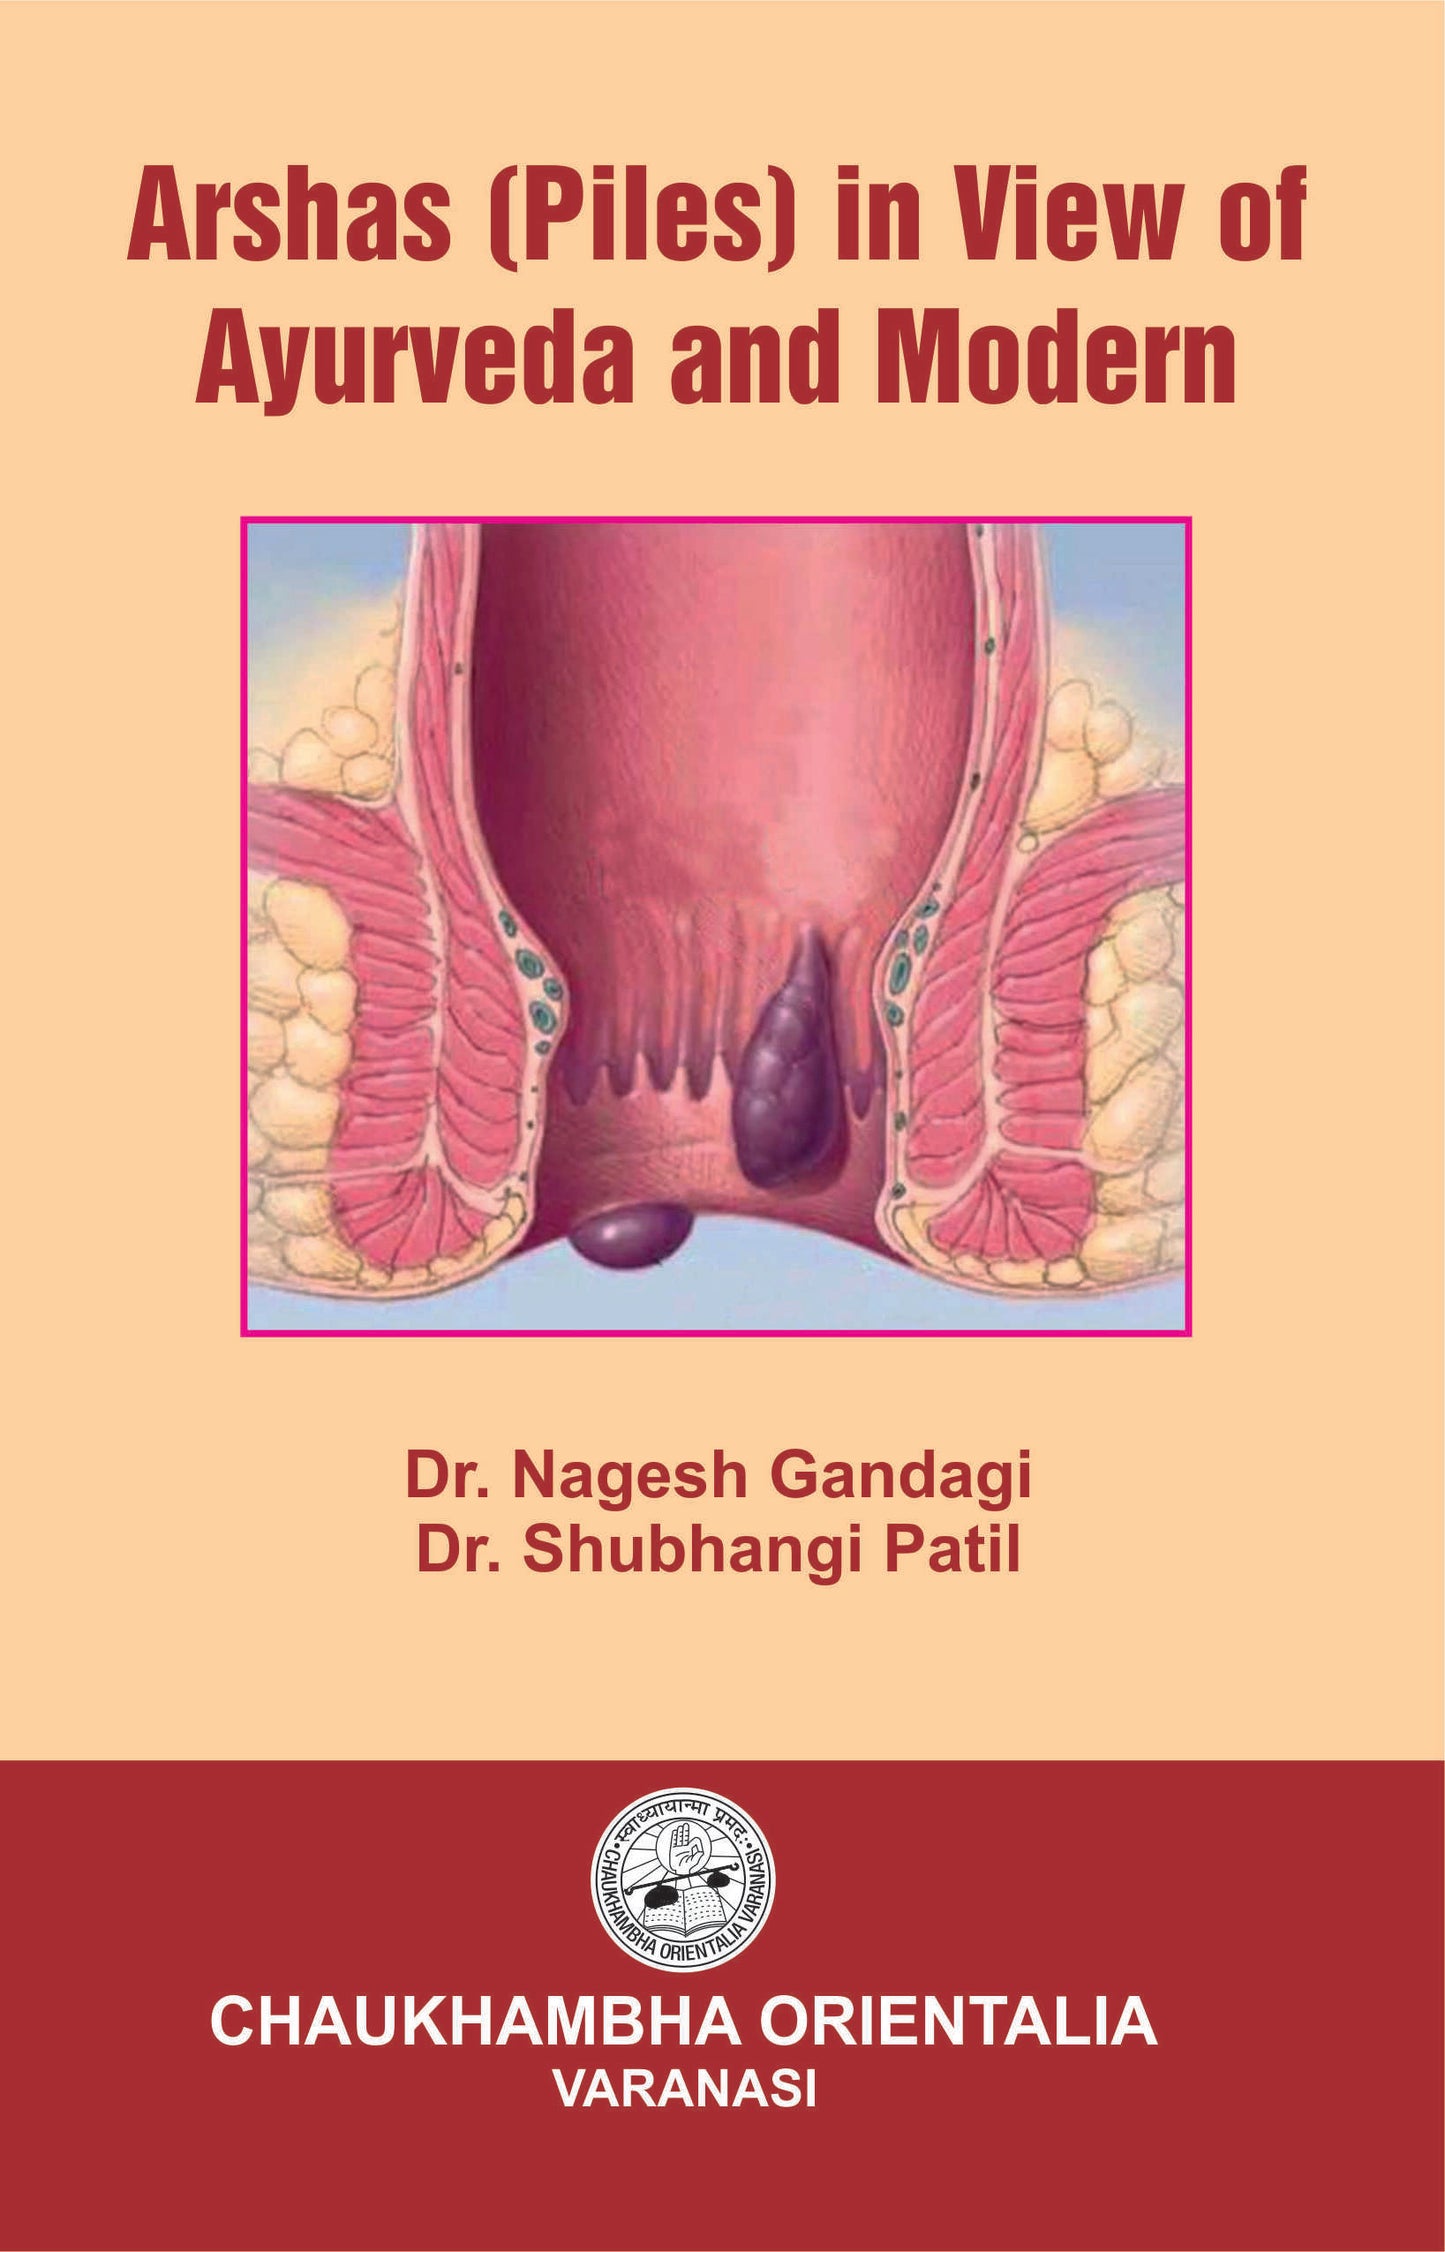 Chaukhambha Orientalia Arshas (Piles) in view of Ayurveda and Modern Medicine